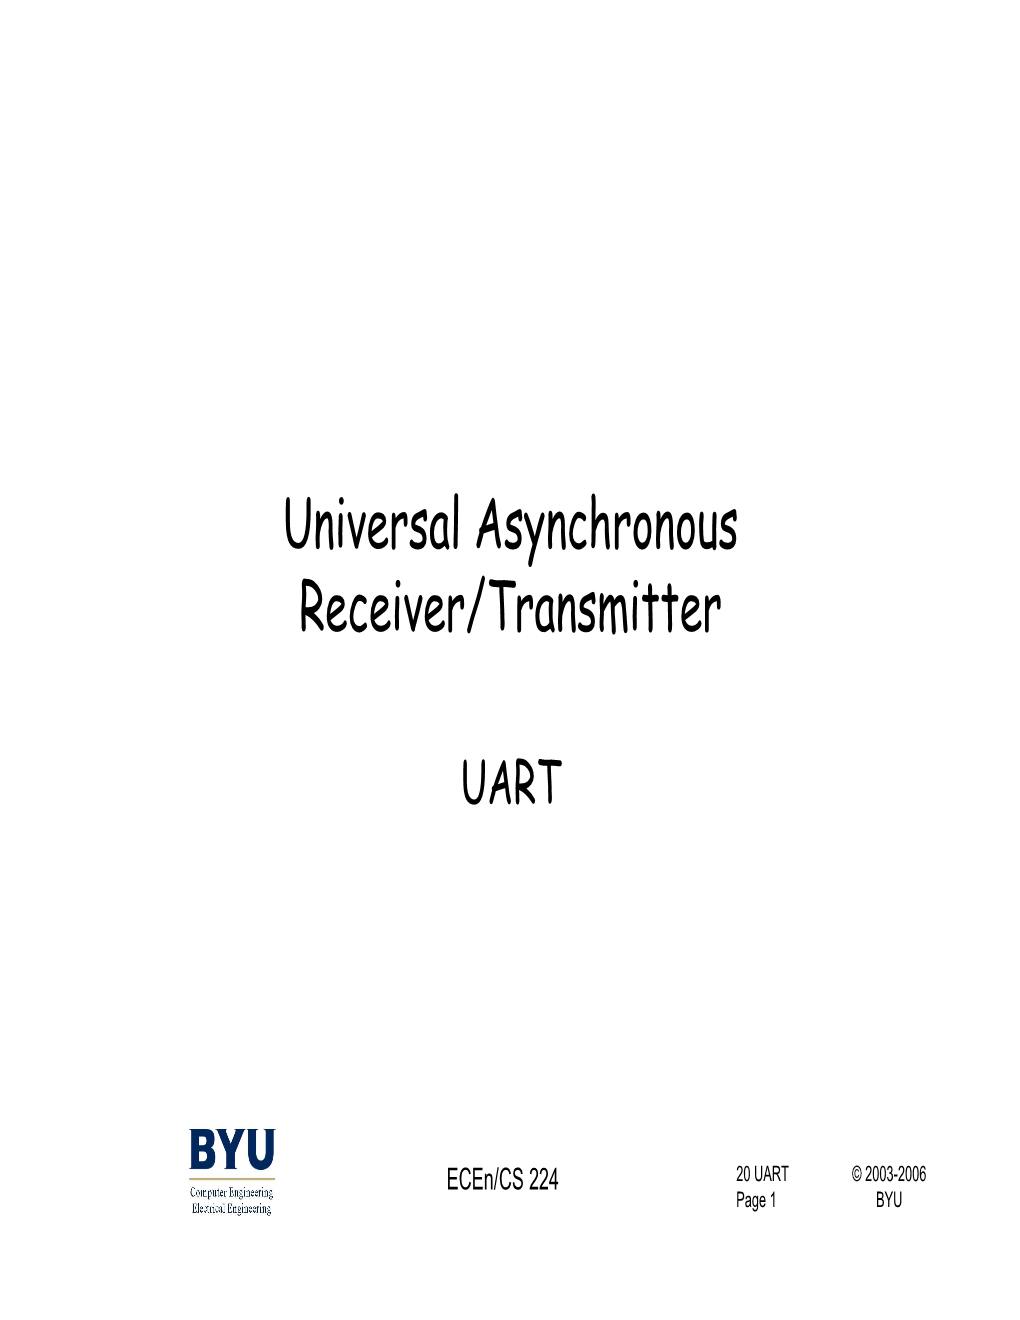 Universal Asynchronous Receiver/Transmitter